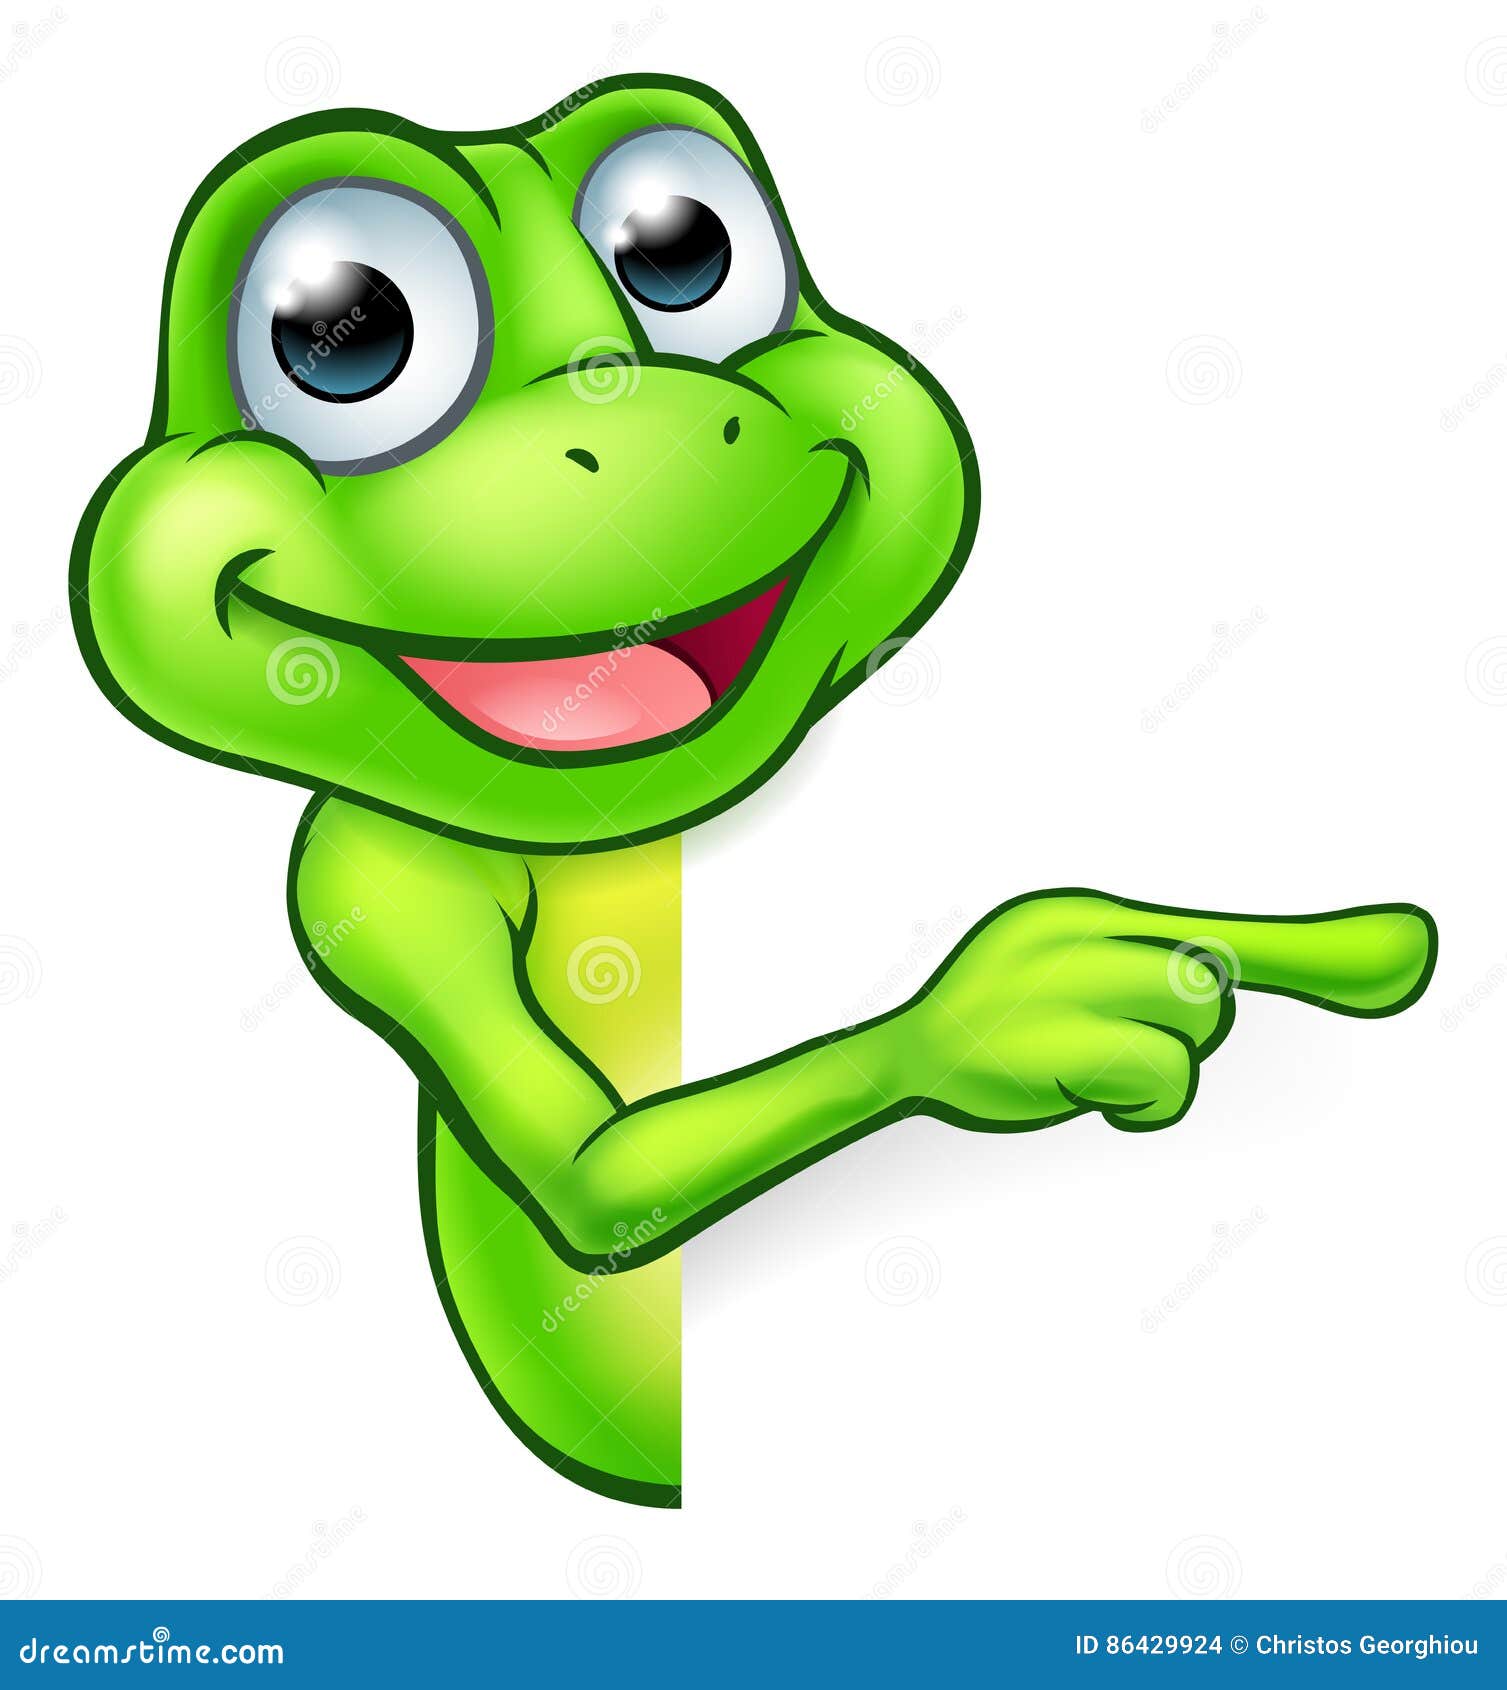 pointing cartoon frog